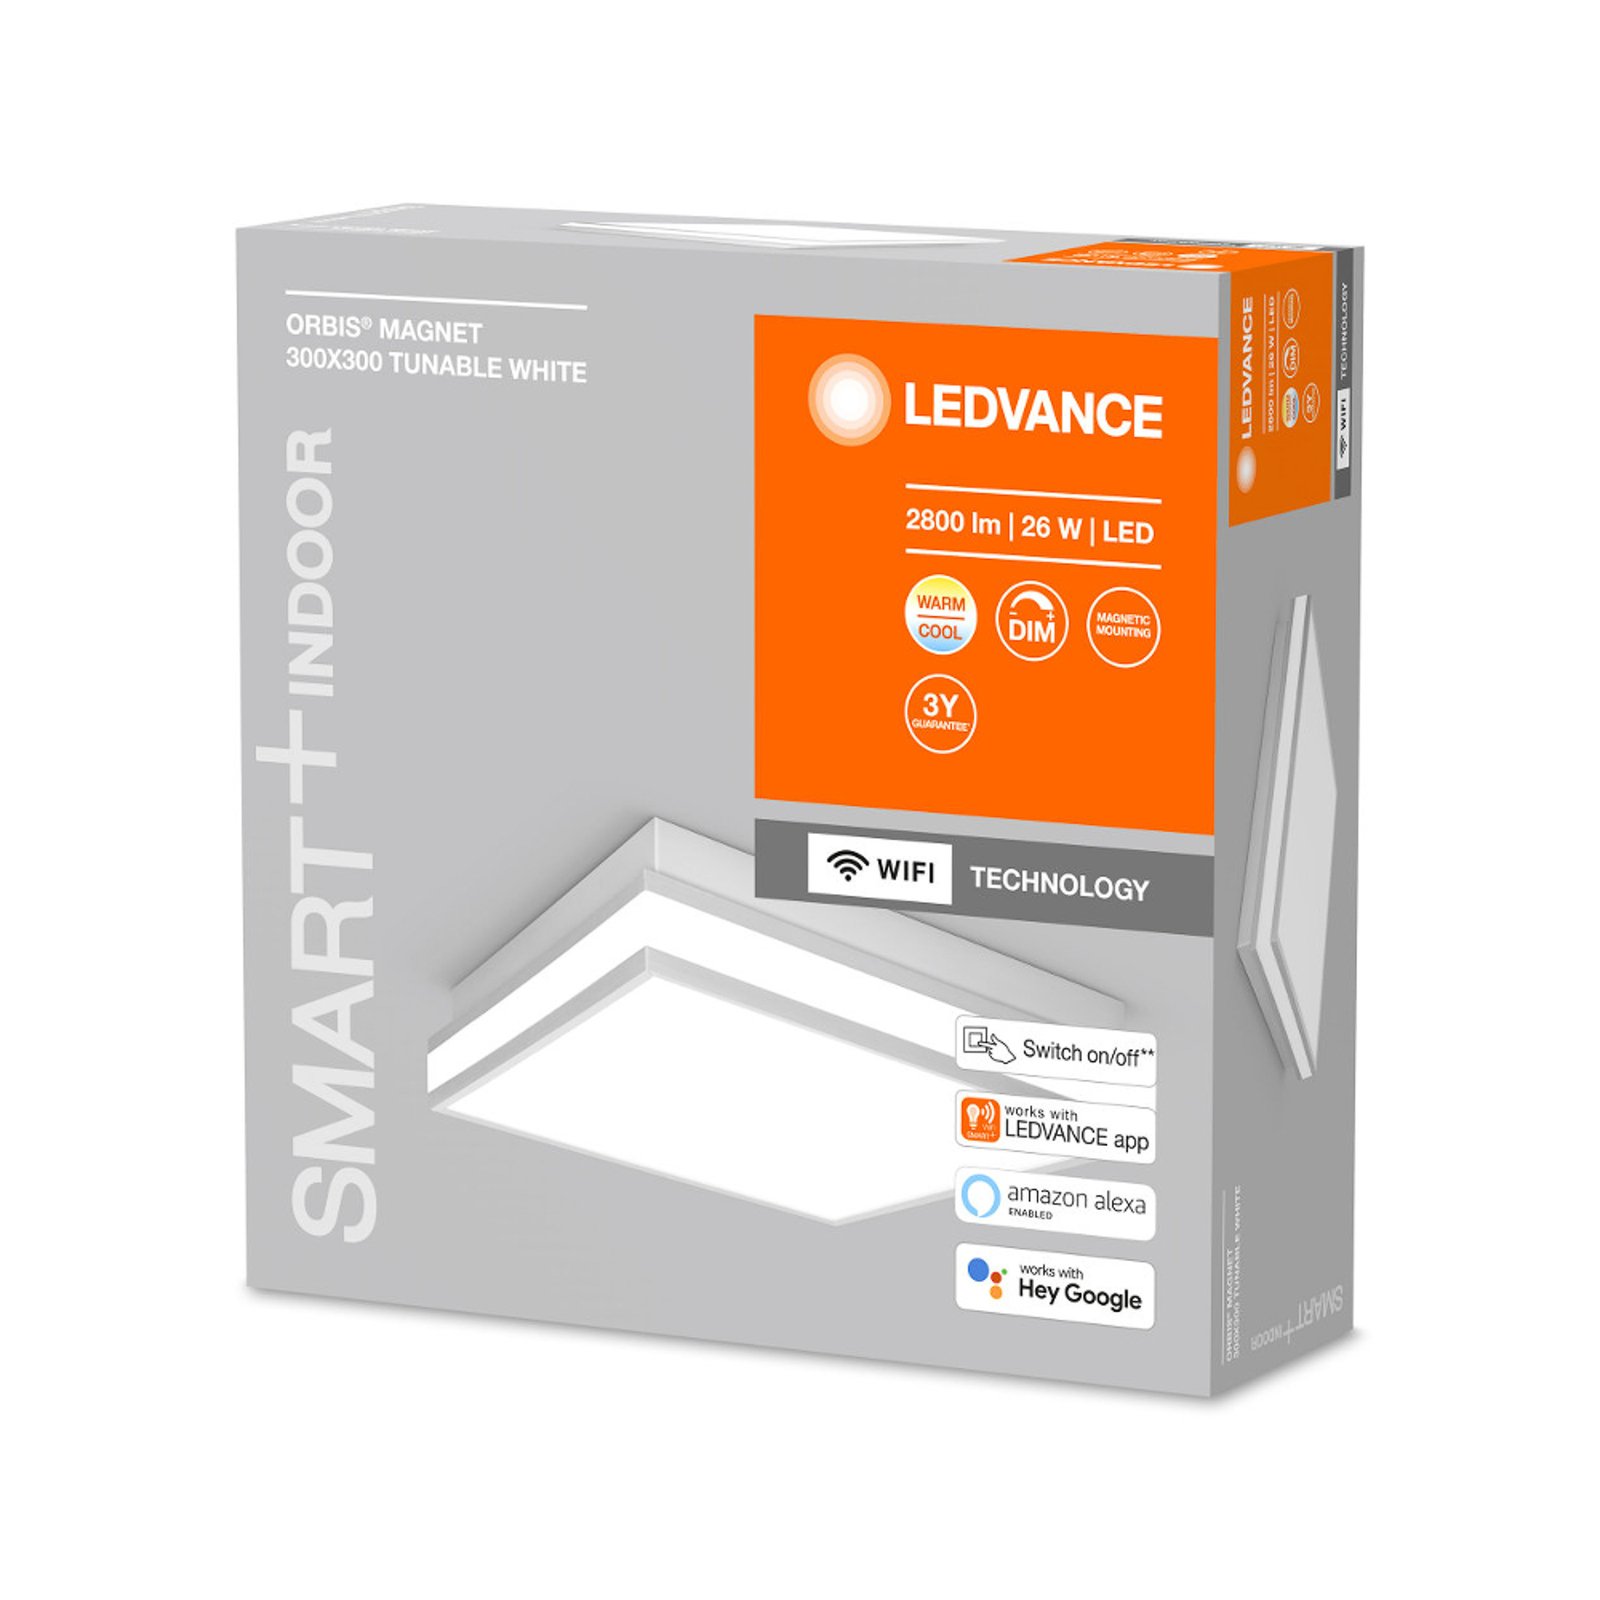 LEDVANCE SMART+ WiFi Orbis magnet šedý, 30x30cm